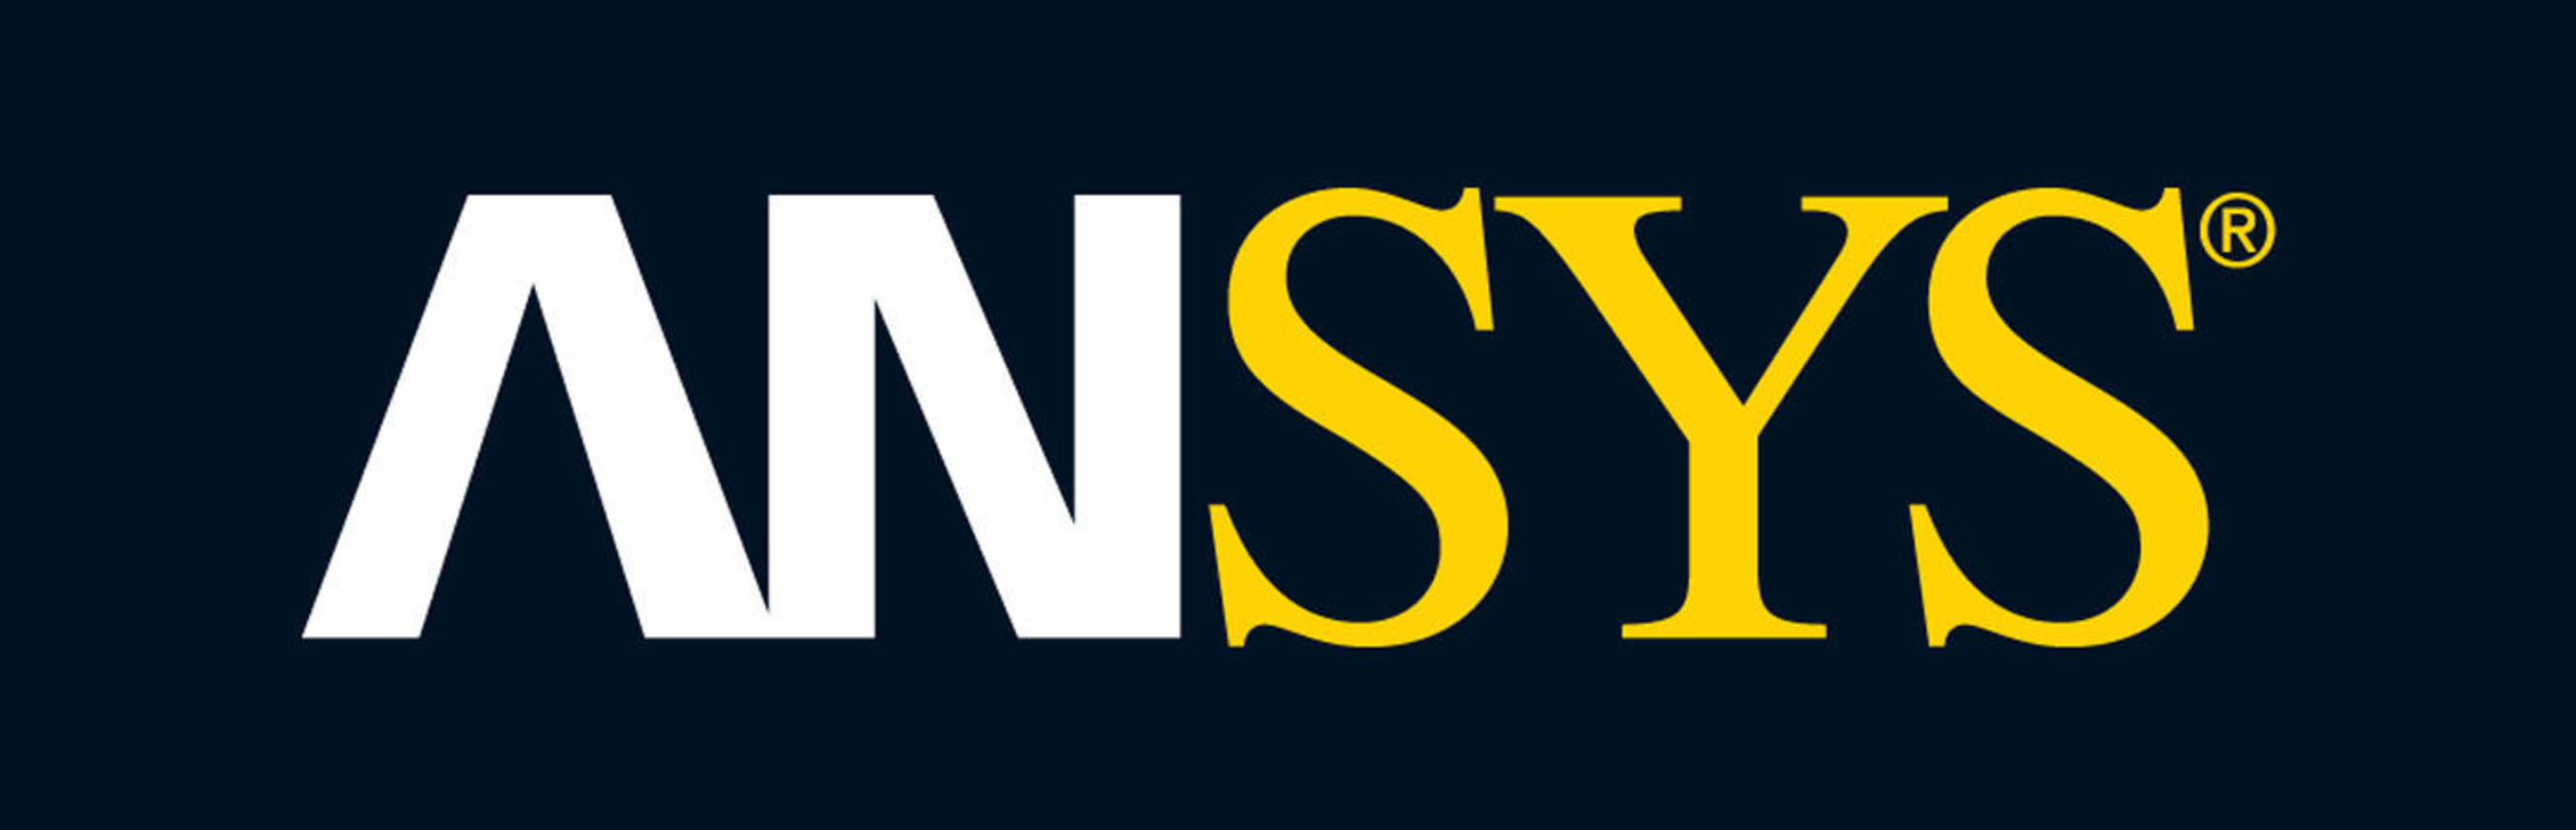 ANSYS, Inc. logo. (PRNewsFoto/ANSYS, Inc.)